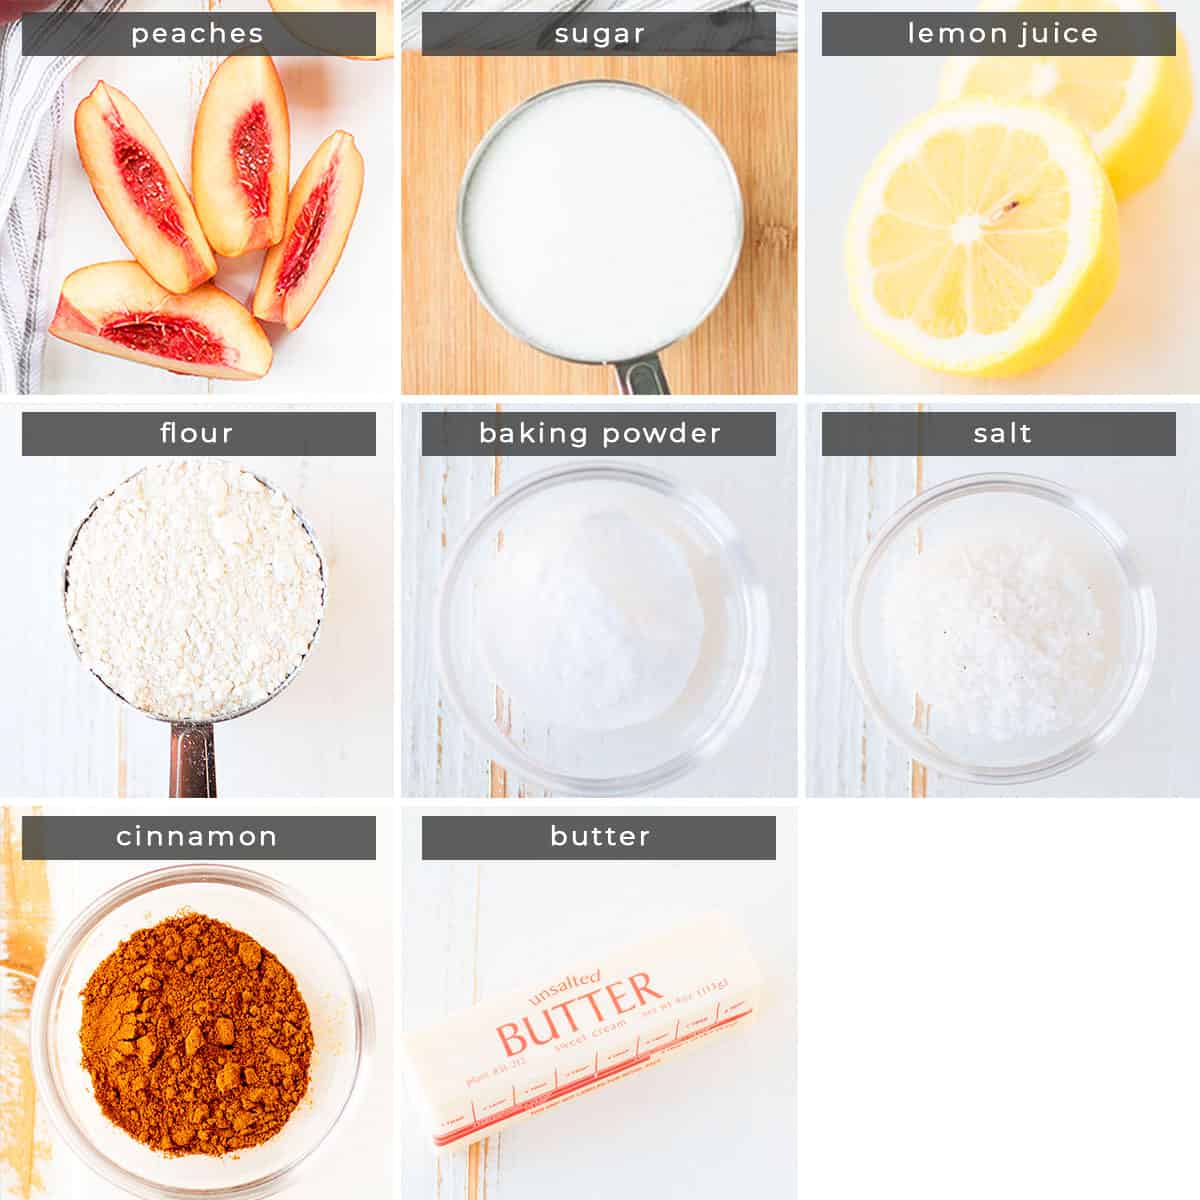 Image containing recipe ingredients peaches, sugar, lemon juice, flour, baking powder, salt, cinnamon, and butter.